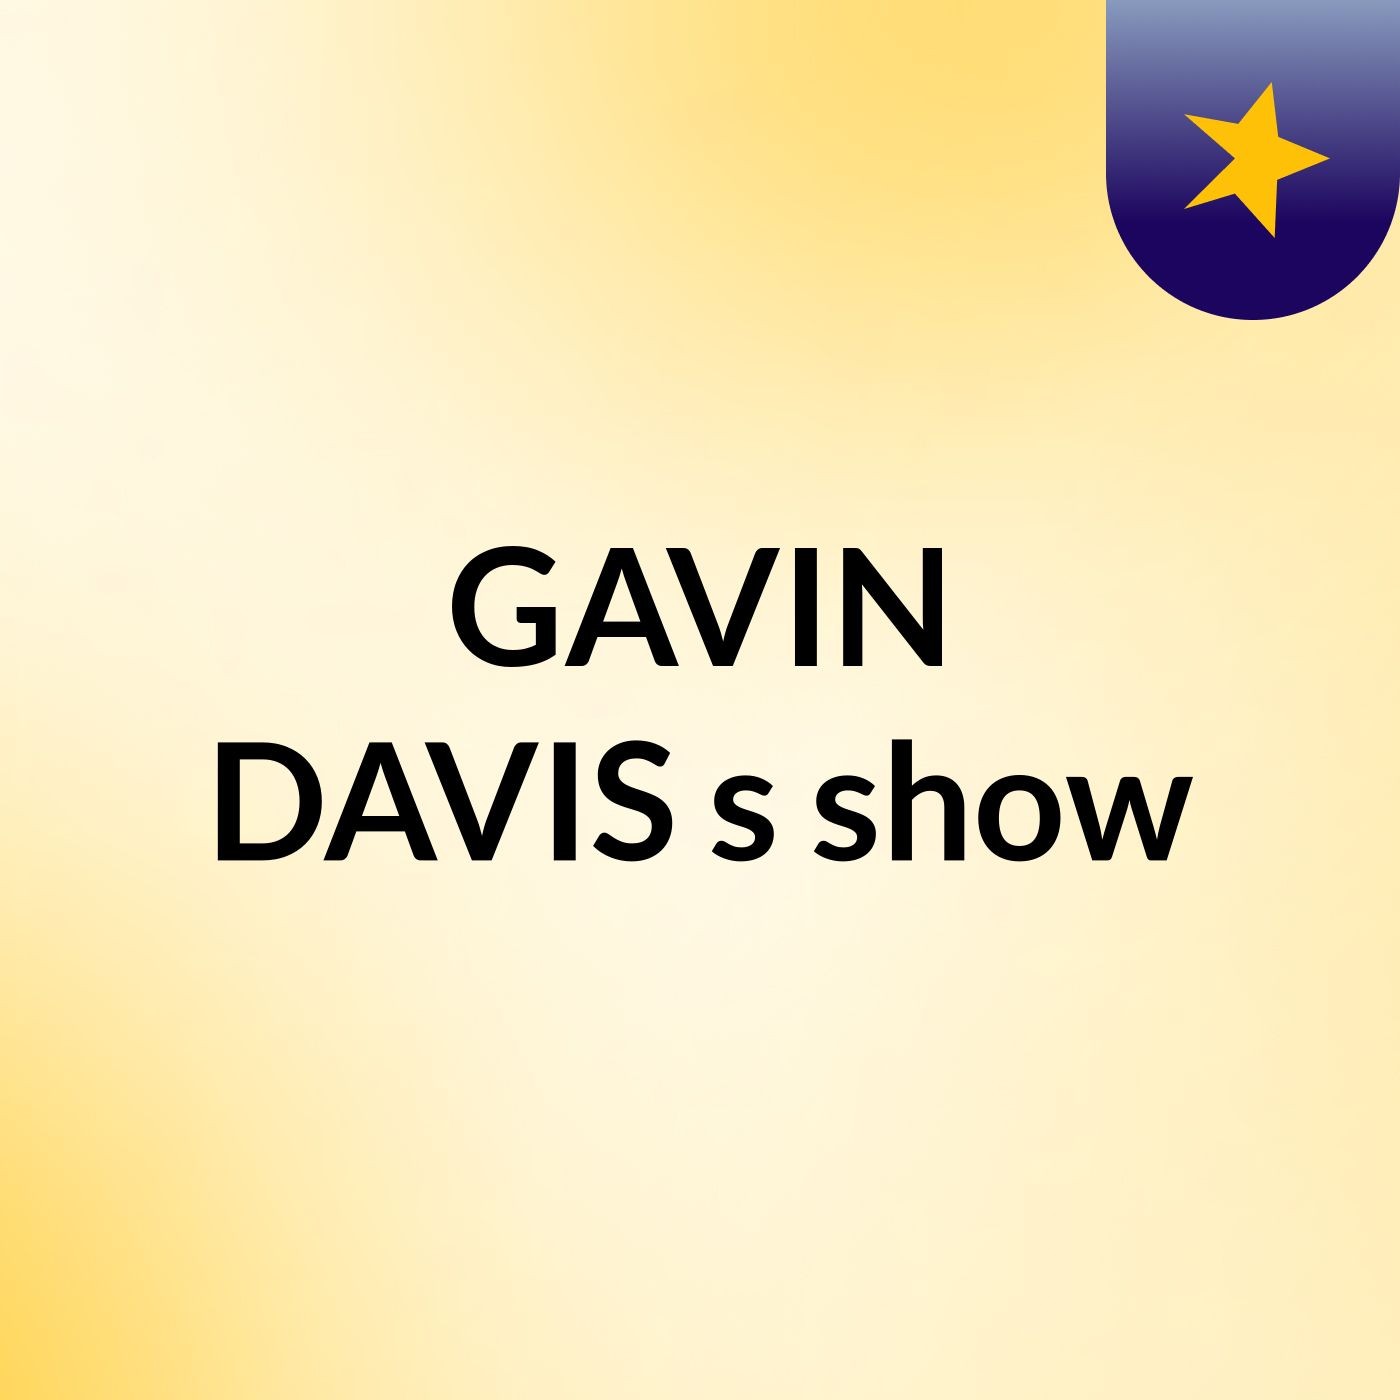 Episode 6 - GAVIN DAVIS's show